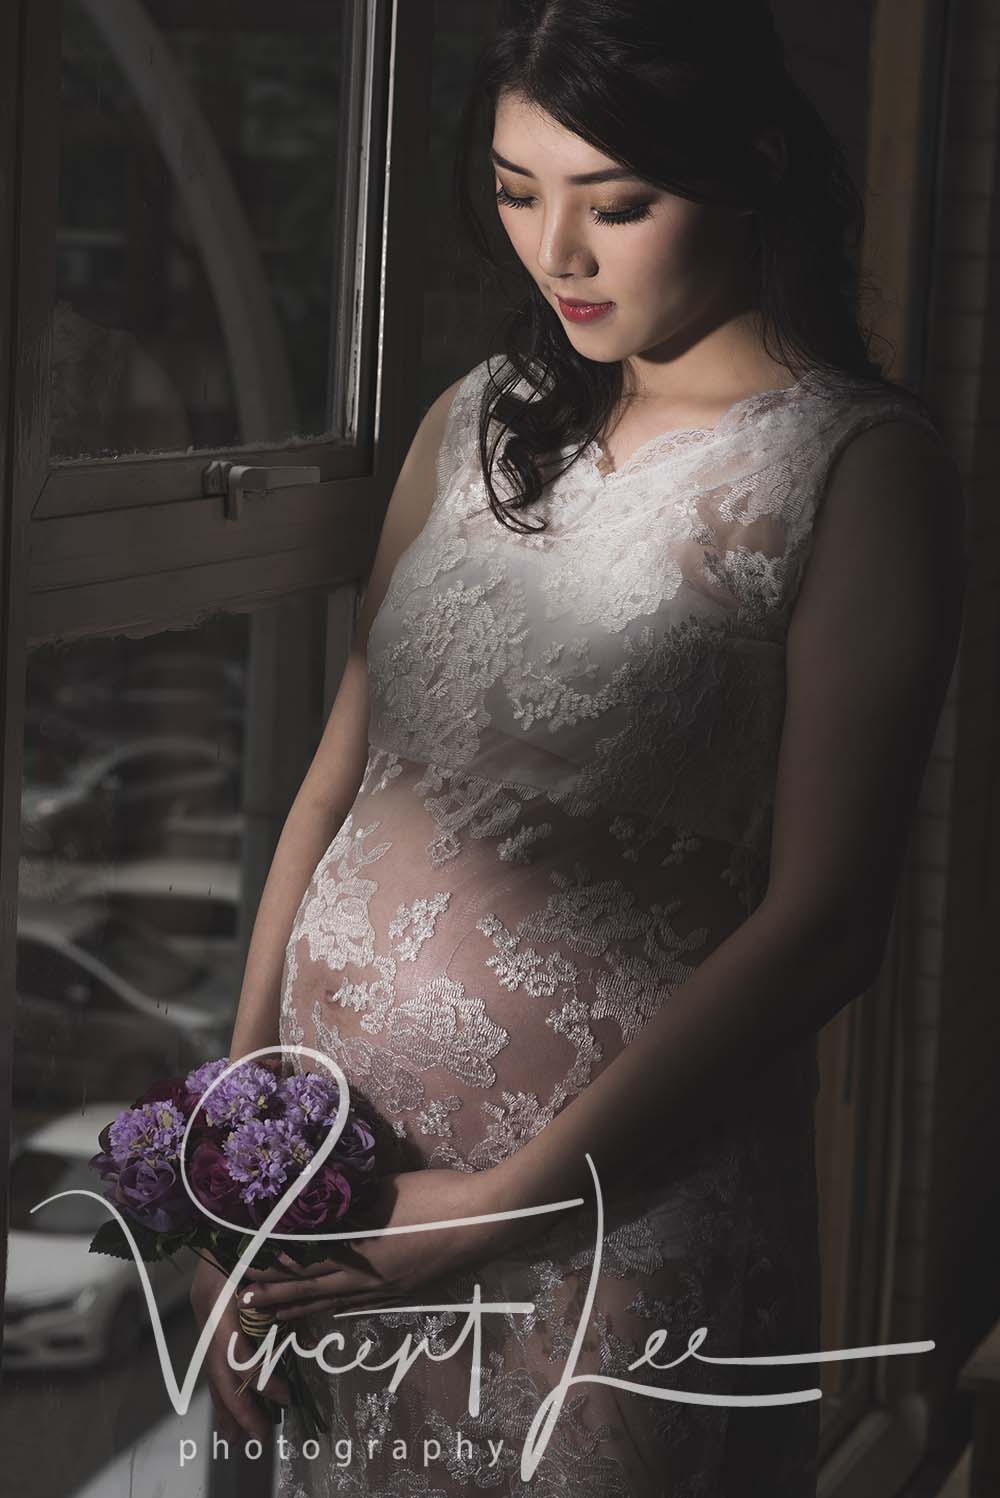 #Maternity #makeupservices #malaysia #studio #photography #awardwinningphotographer #internationalacclaimed #creative #unique #pregnant #beauty #Nikon #Elinchrom #Blueangel #bluefairy 